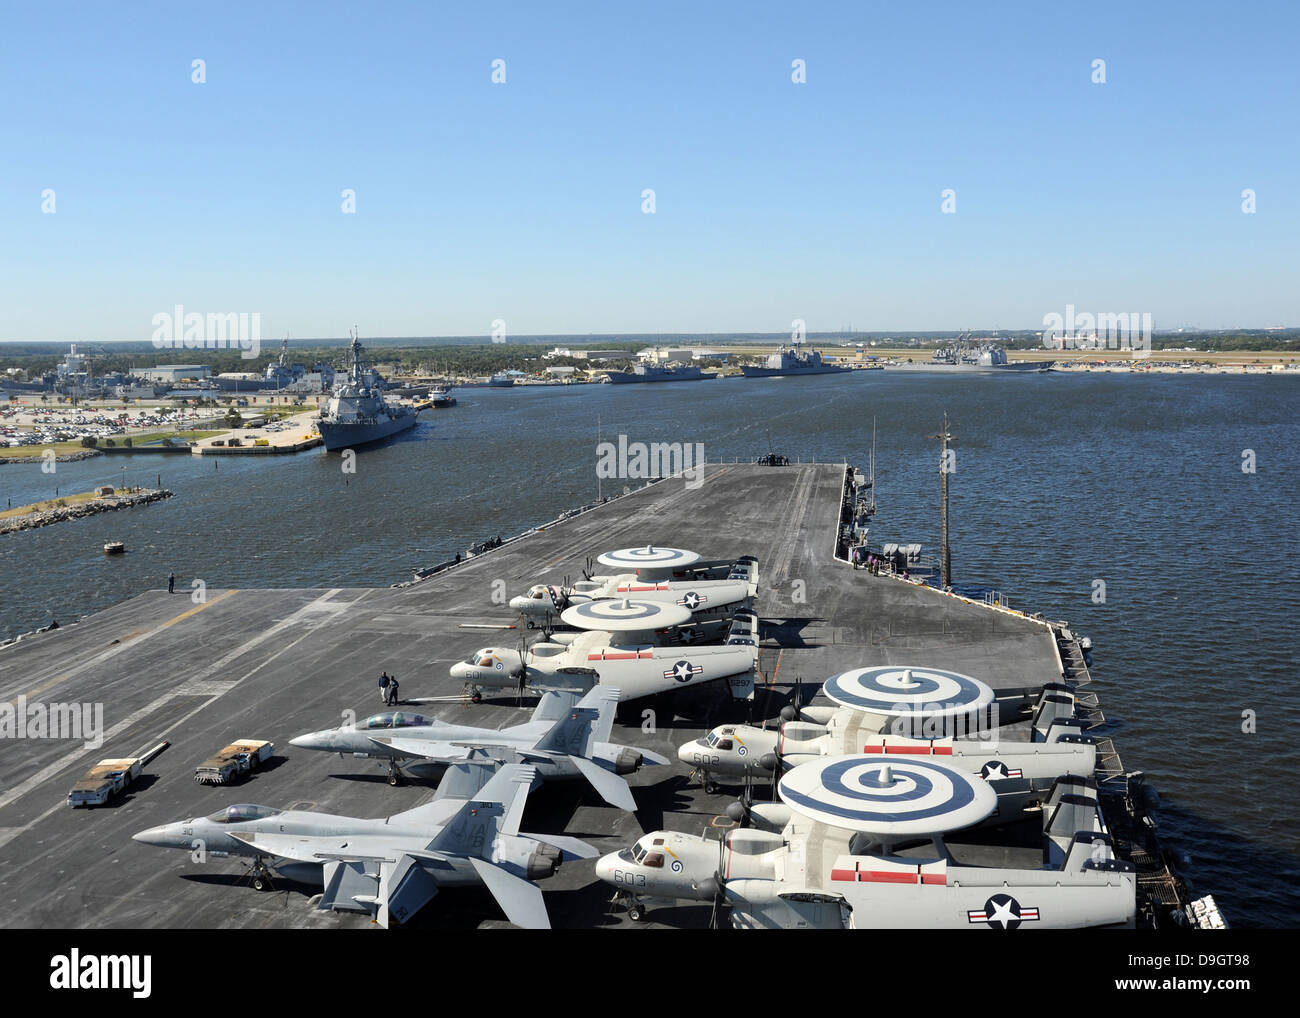 Mayport, Florida, October 31, 2012 - The aircraft carrier USS Enterprise (CVN 65) arrives at Naval Station Mayport, Florida. Stock Photo